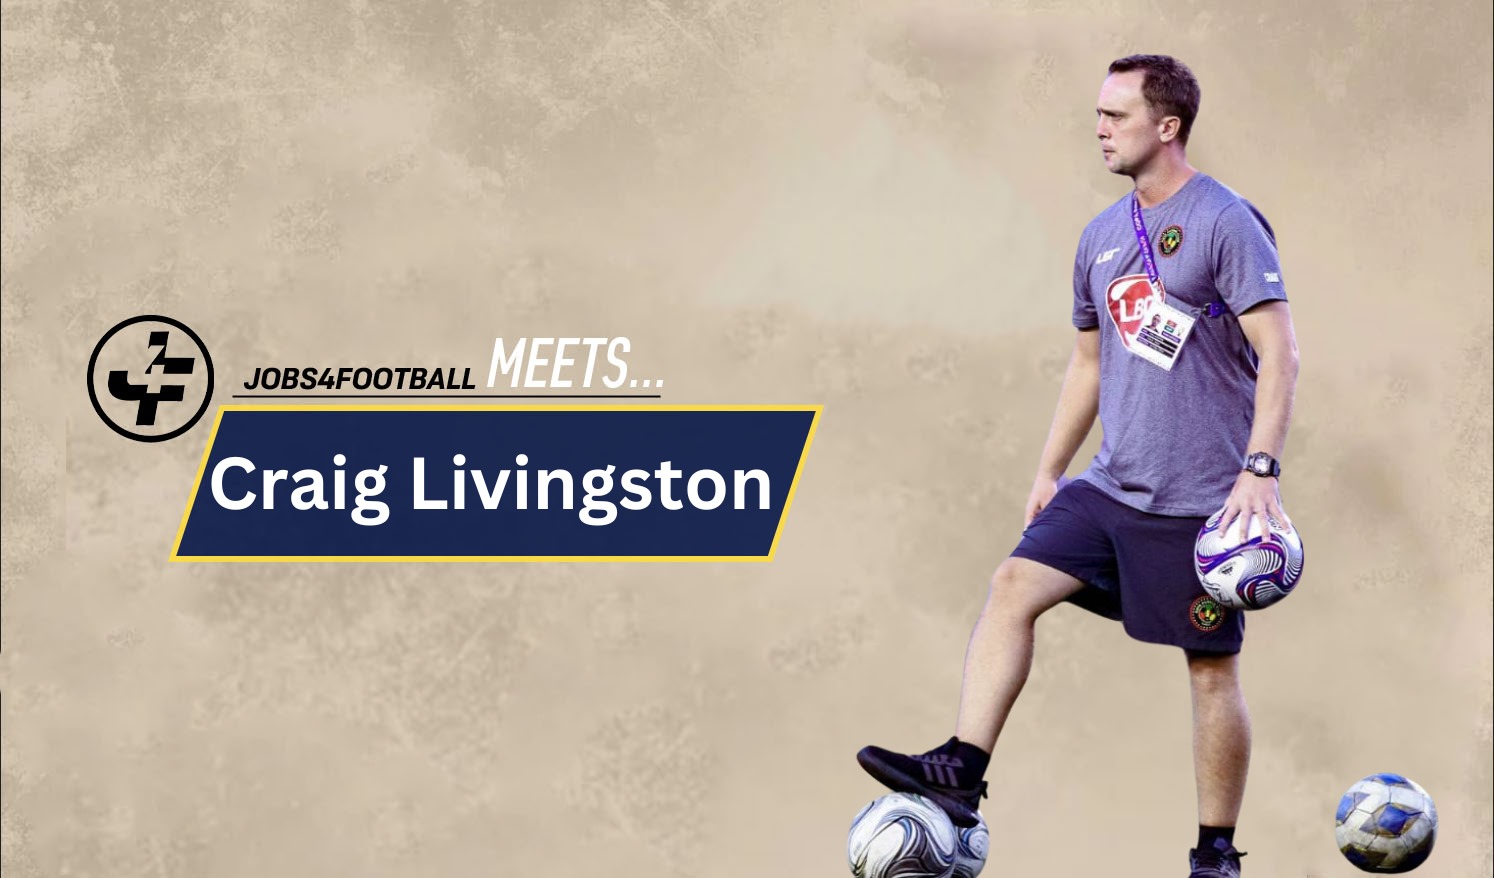 Jobs4football meets Craig Livingston